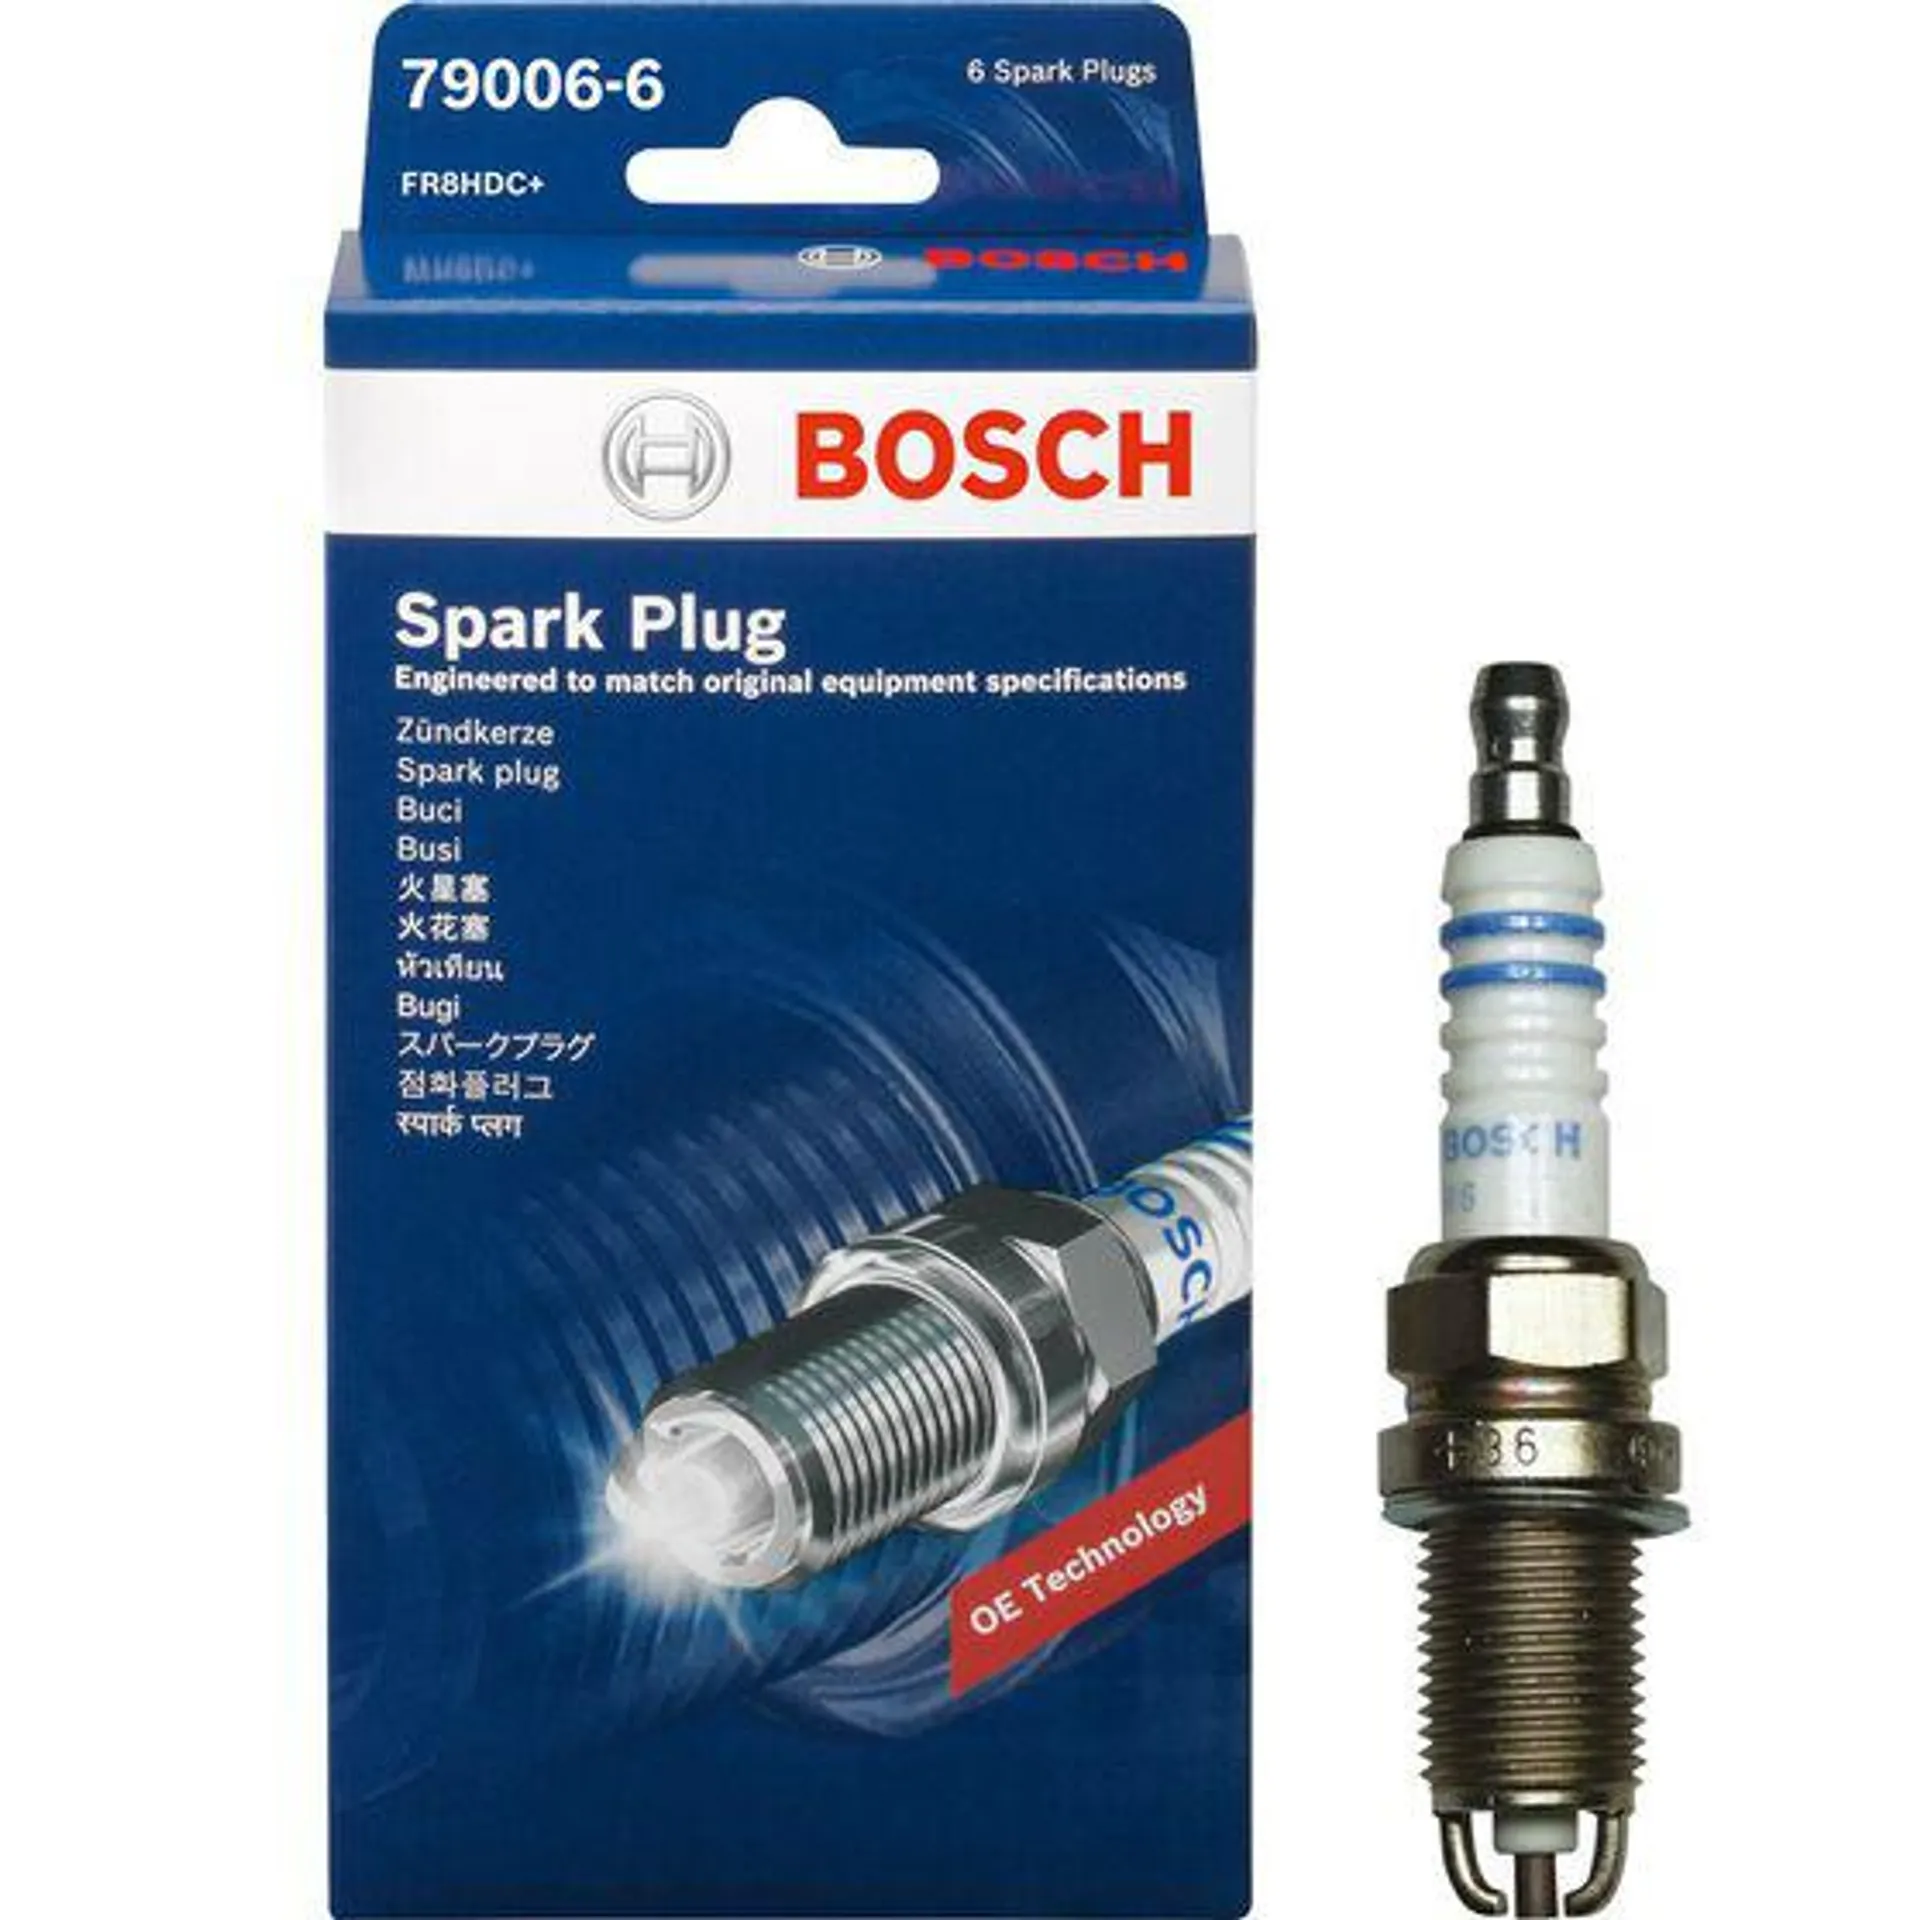 Bosch Spark Plug 79006-6 6 Pack